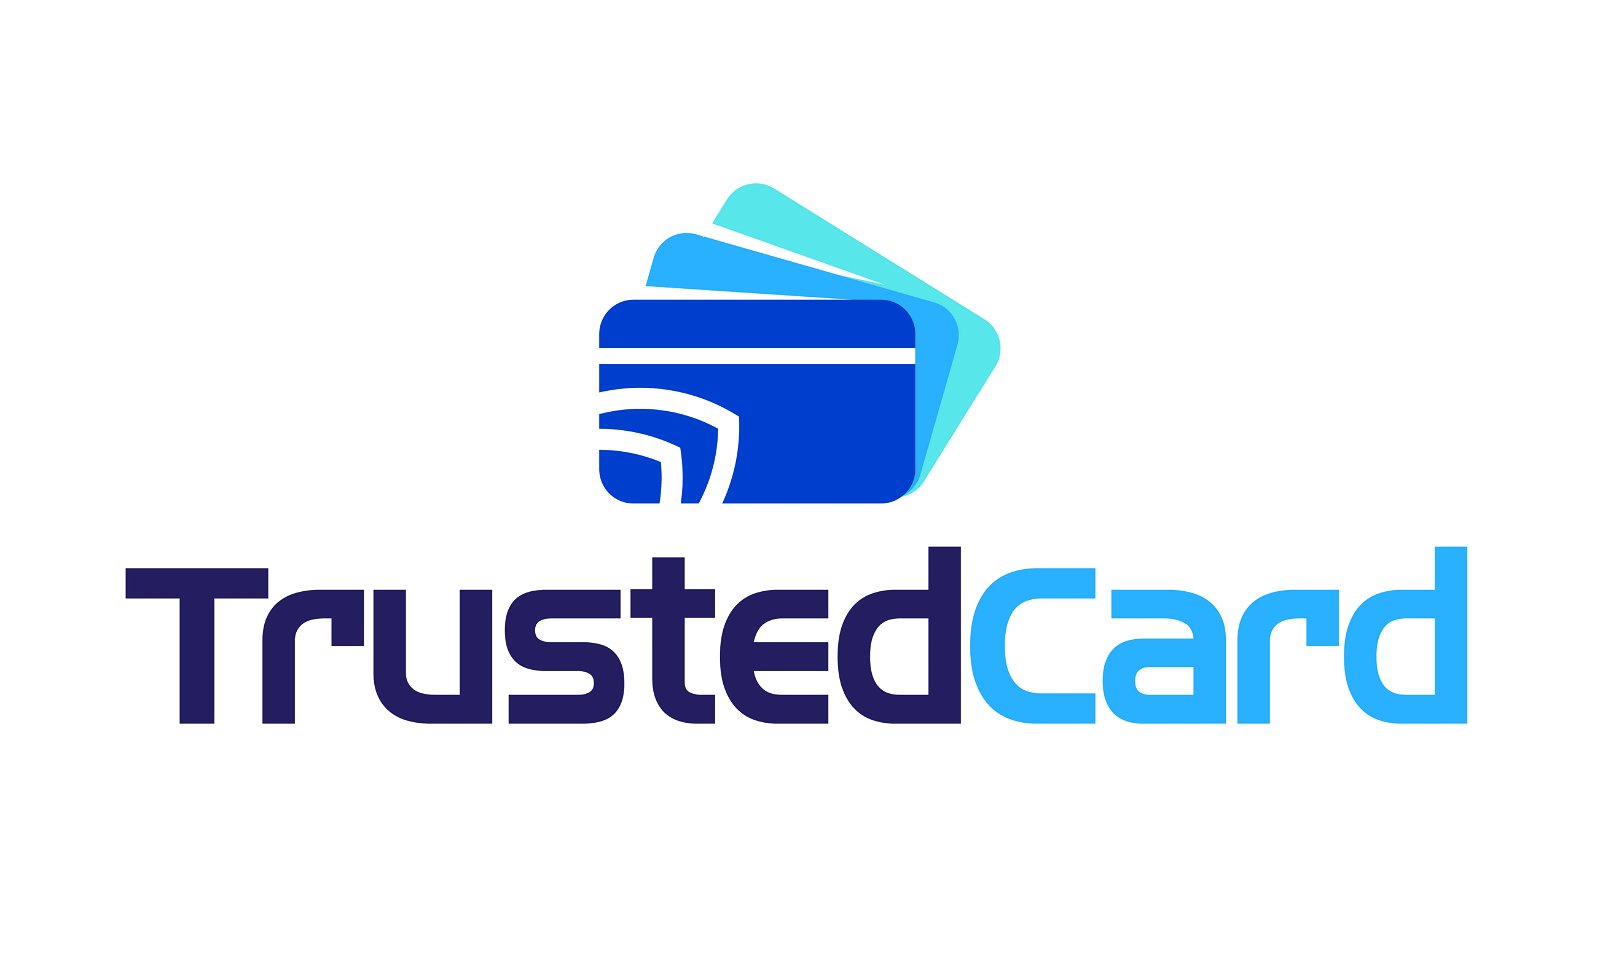 TrustedCard.com - Creative brandable domain for sale